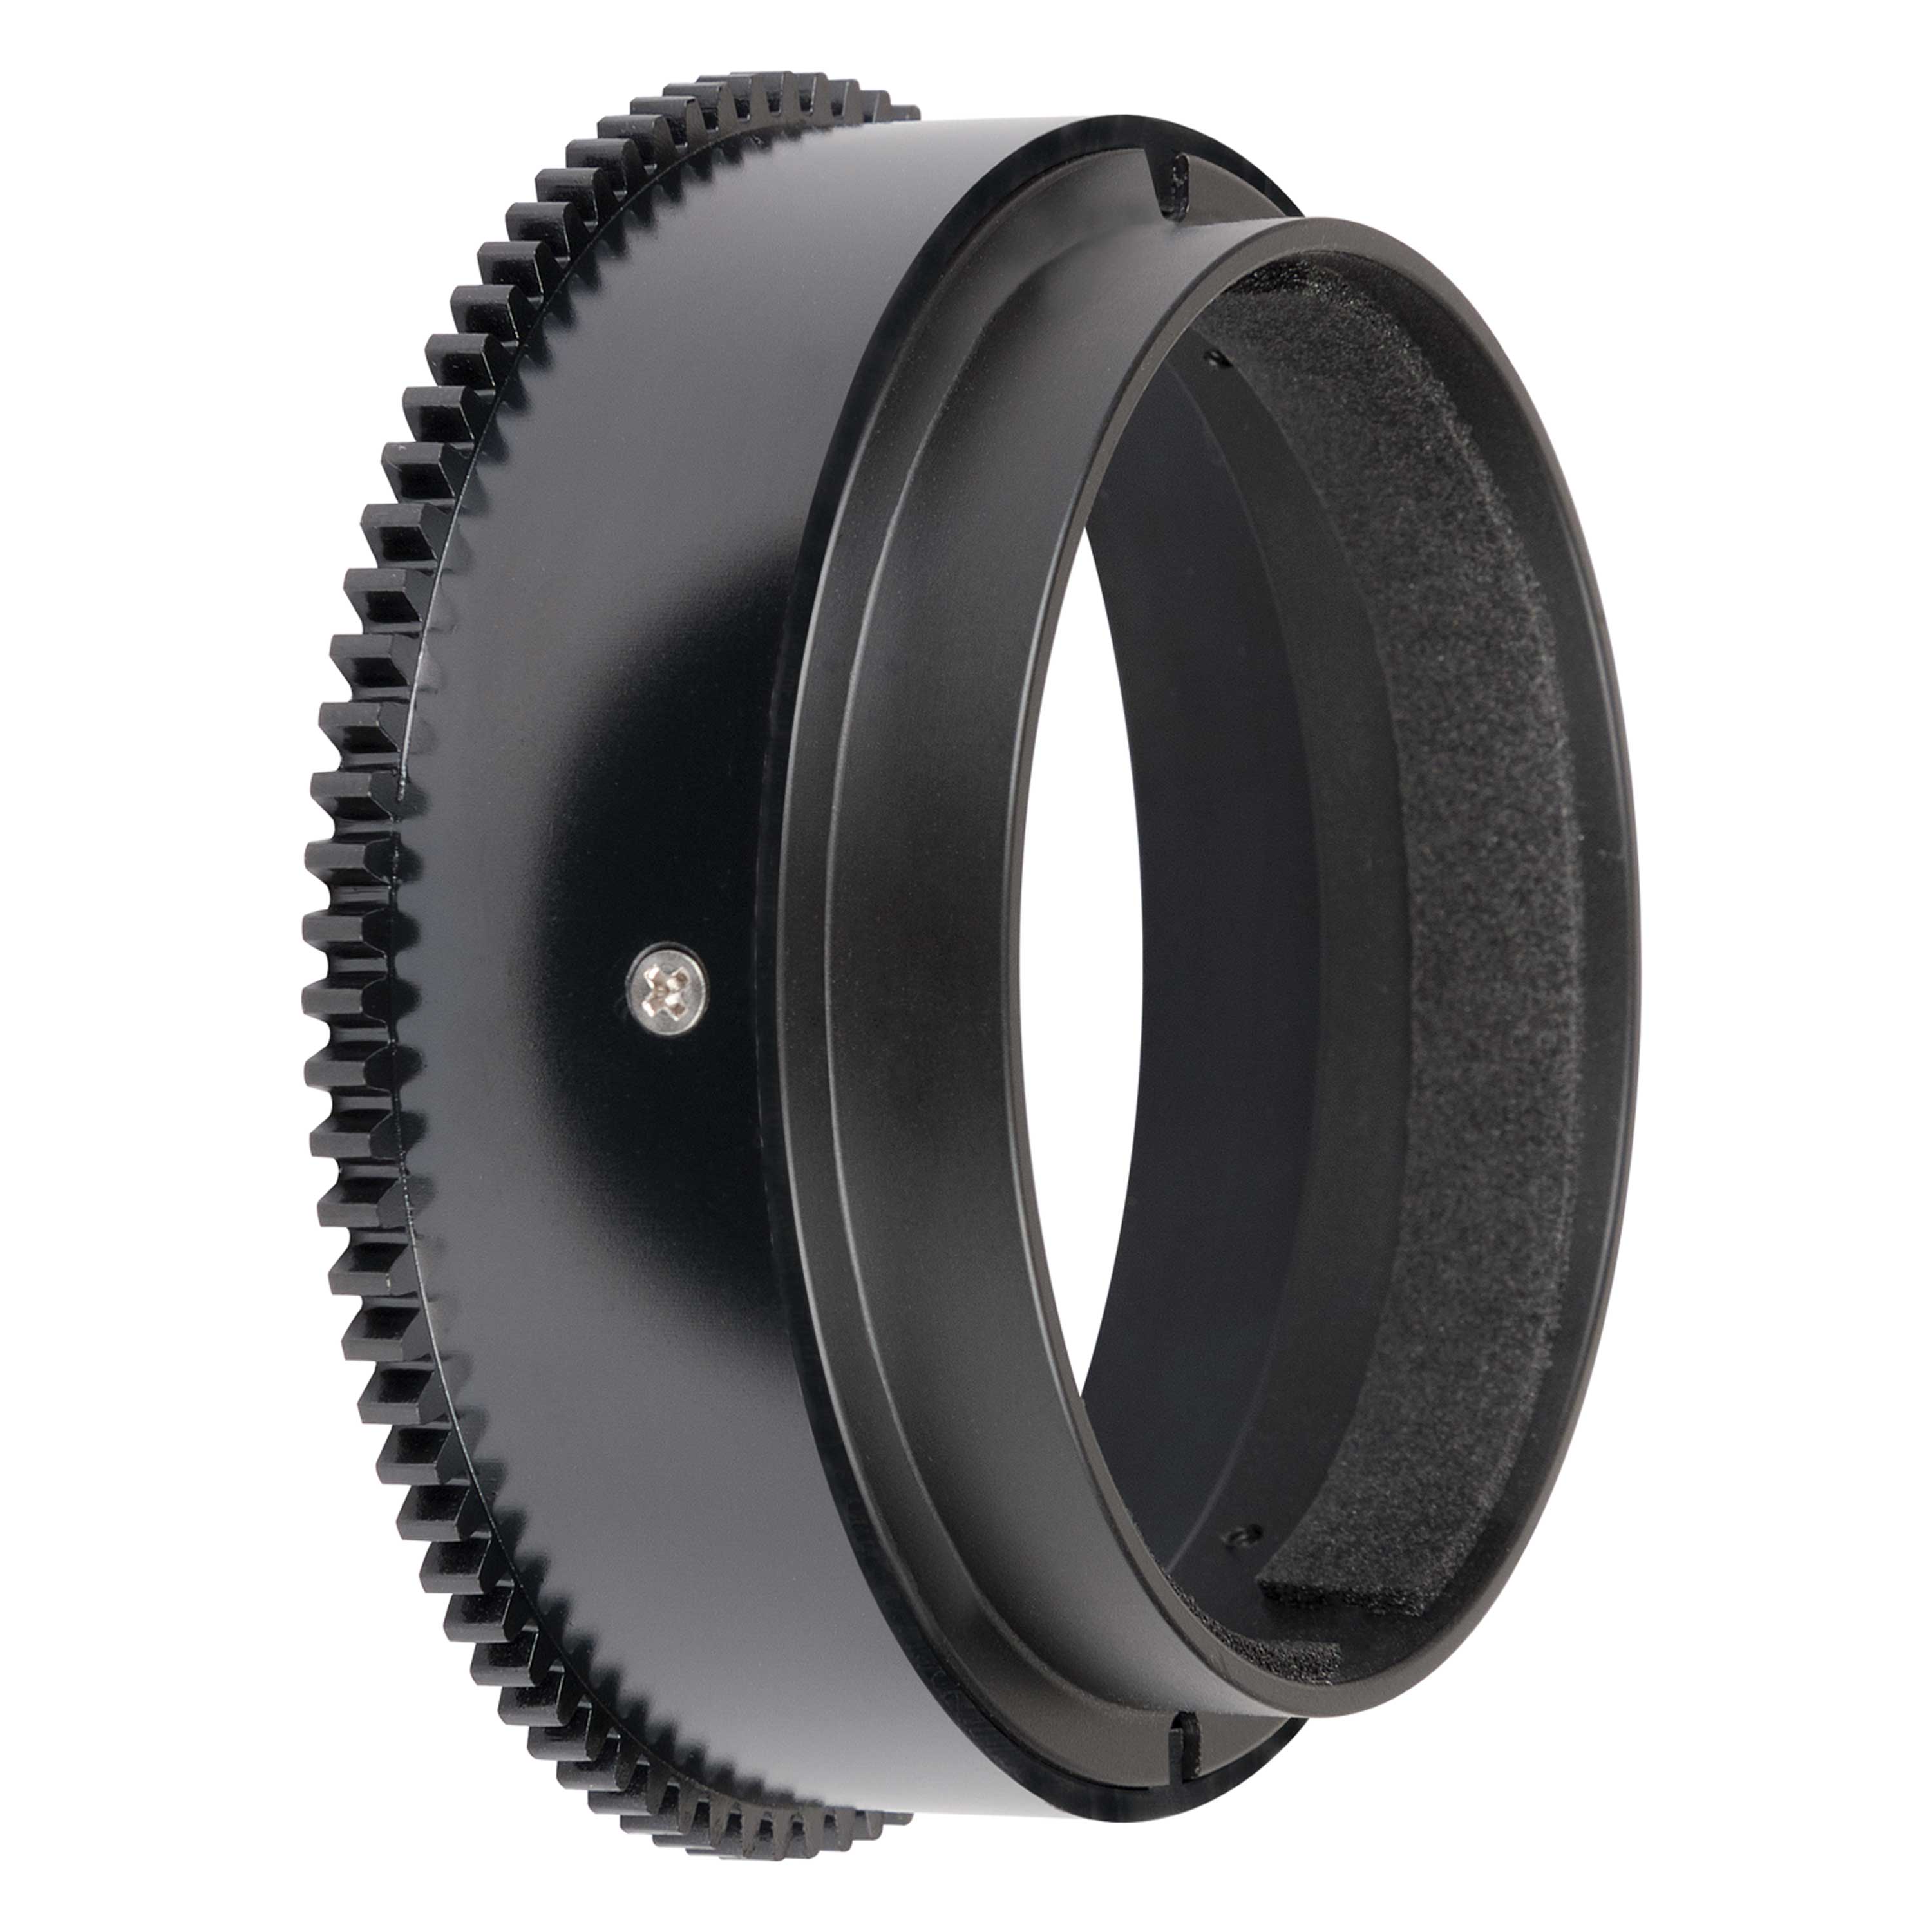 Zoom Gear for Panasonic 12-35mm Lens (DLM/B)